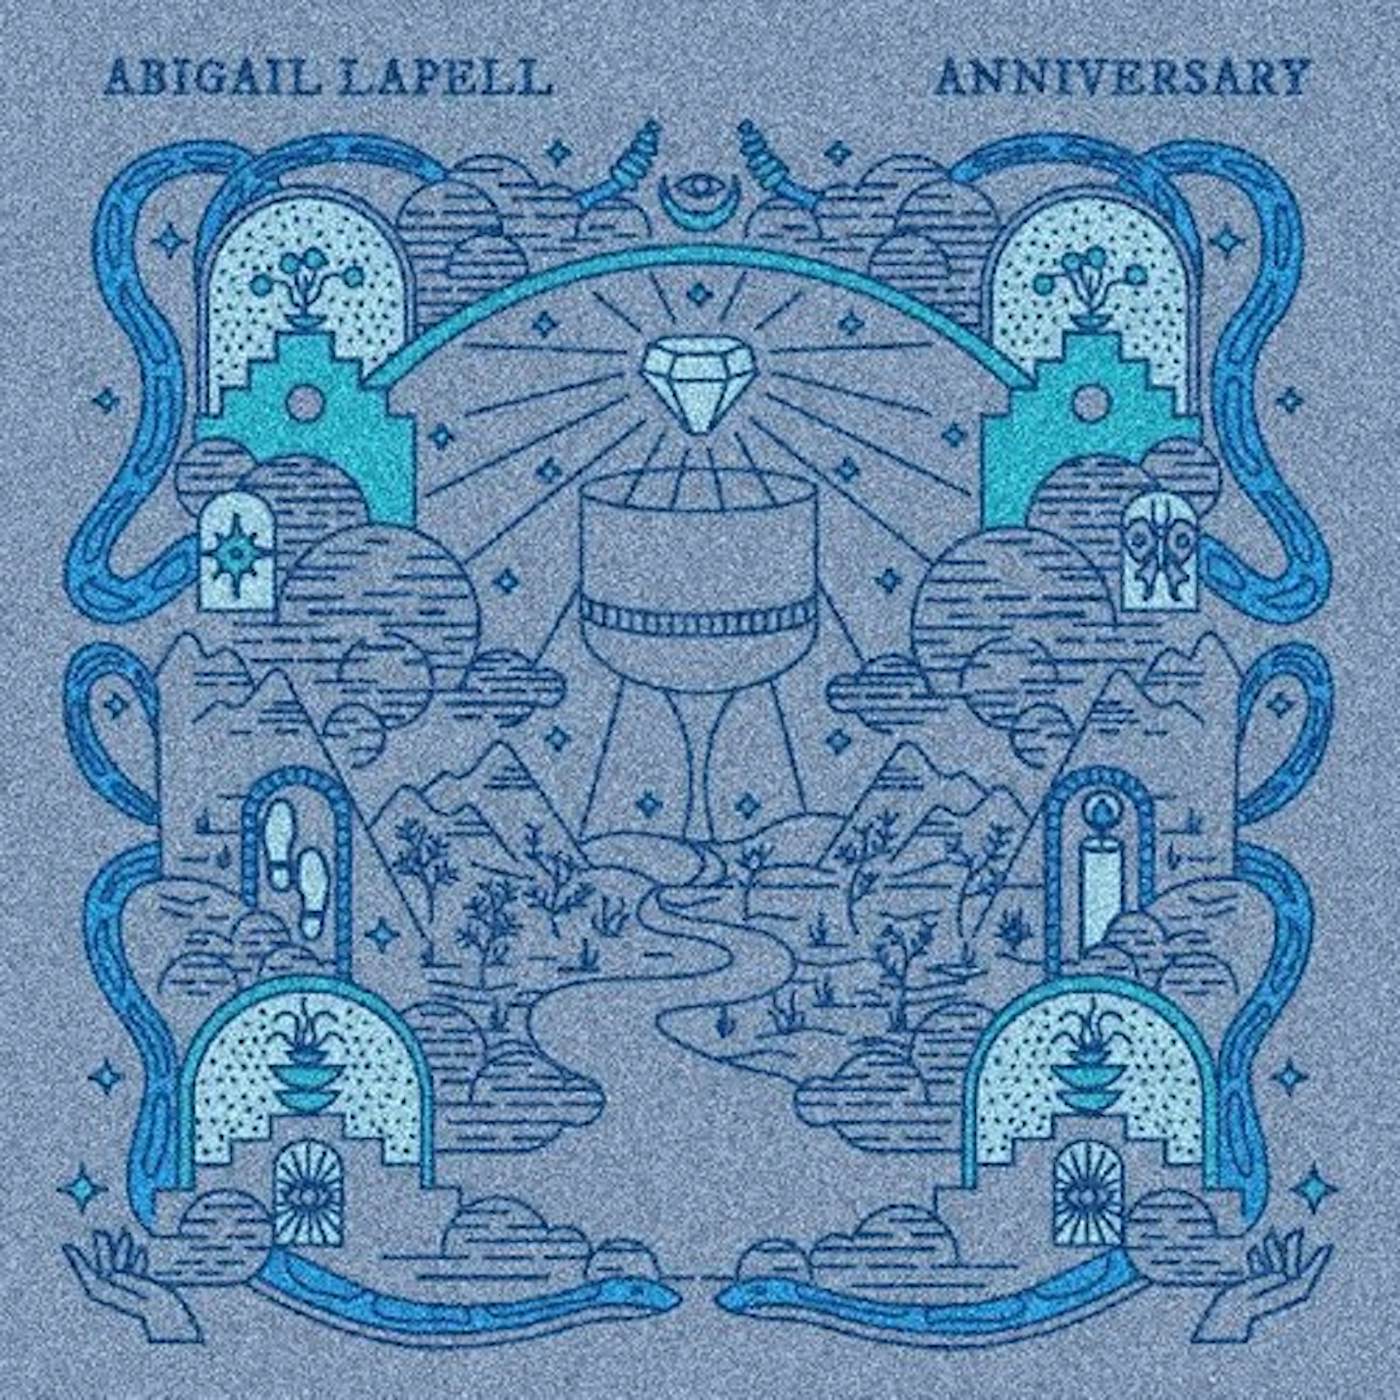 Abigail Lapell ANNIVERSARY CD